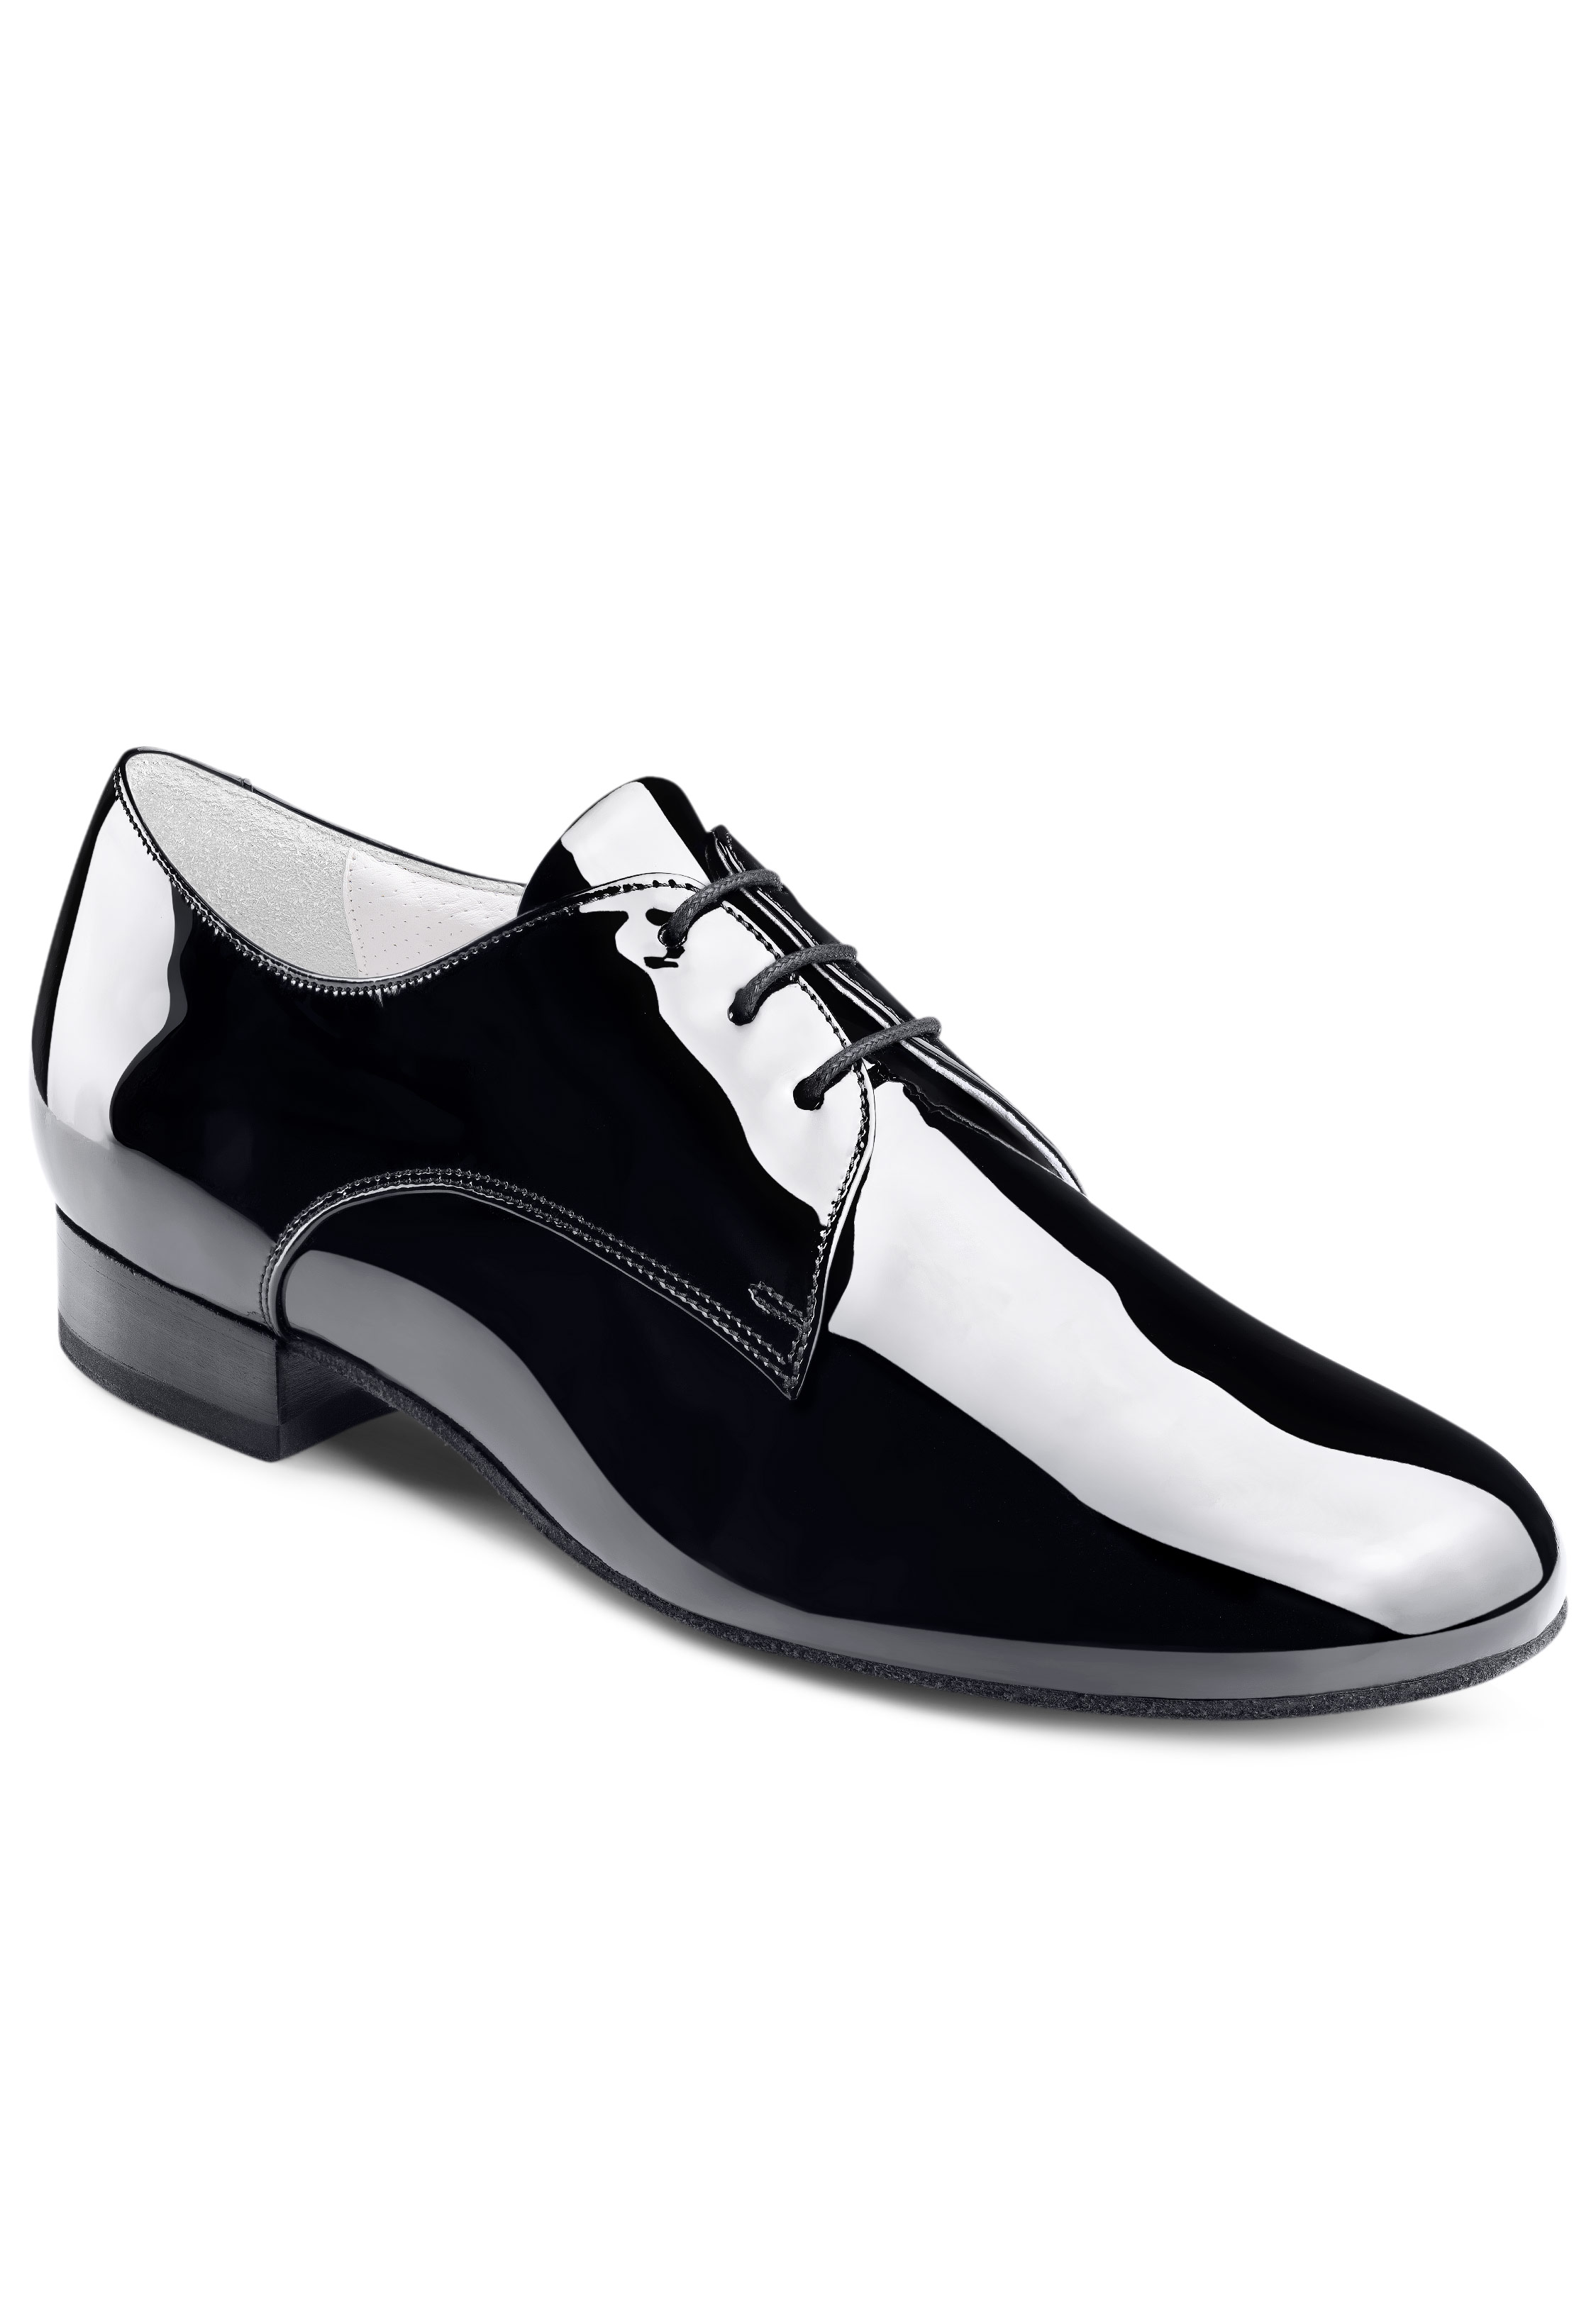 Men's Ballroom Salsa Latin Tango Black Dark Tan White Dance Shoes Very Fine ST38 